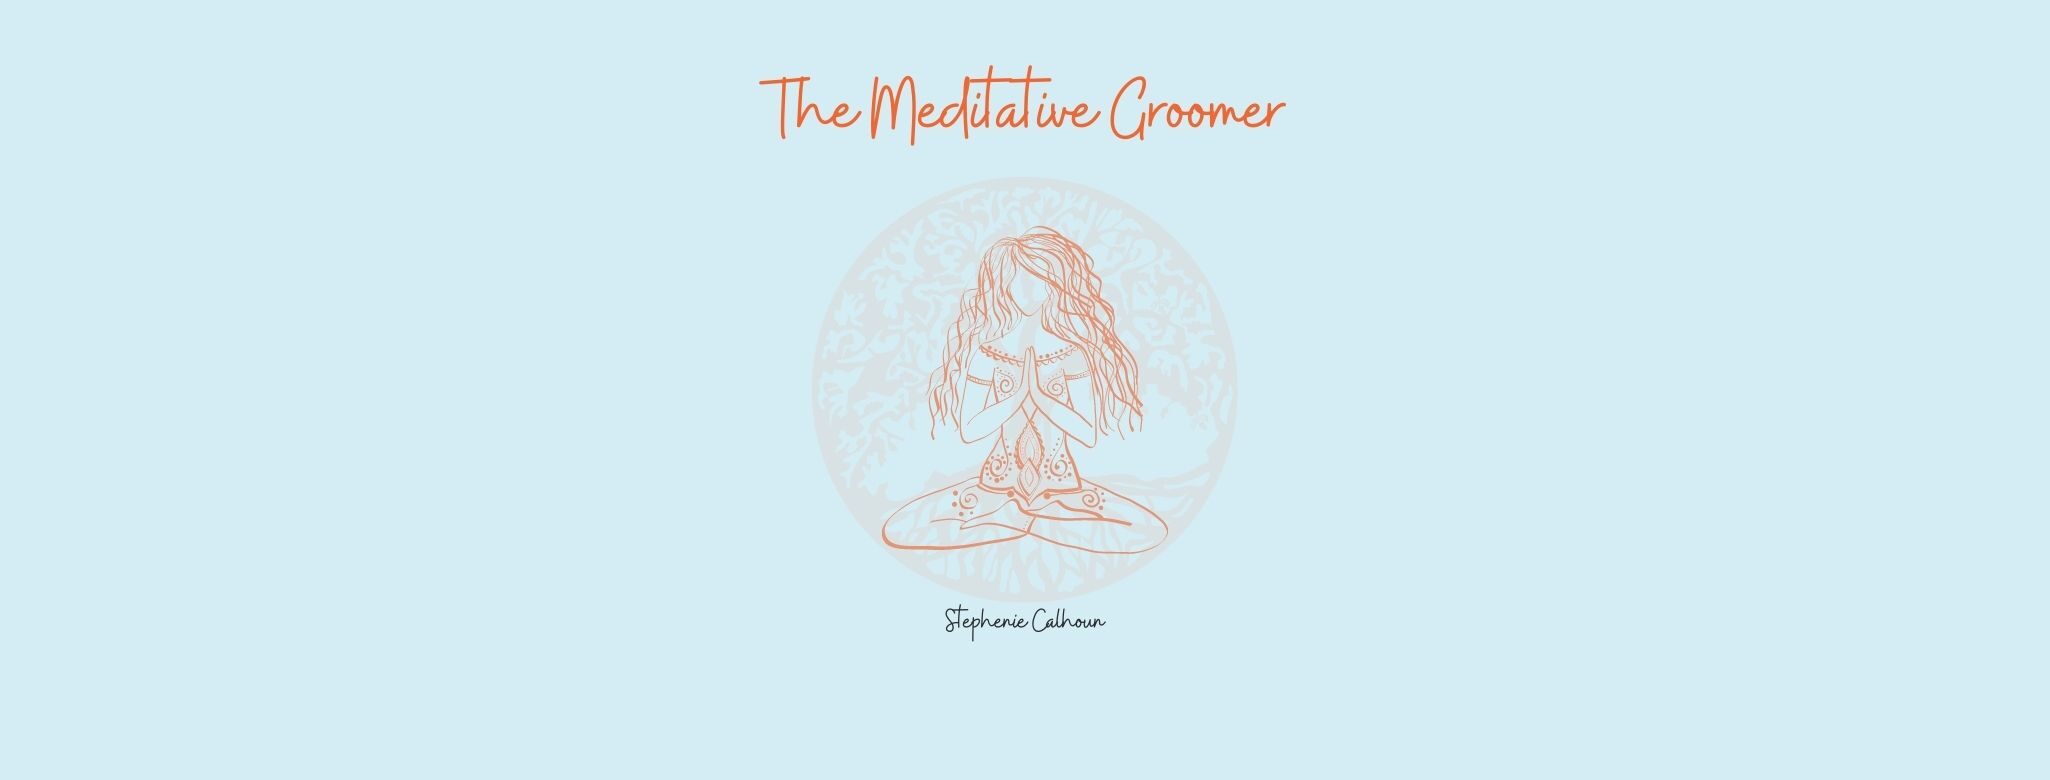 The Meditative Groomer